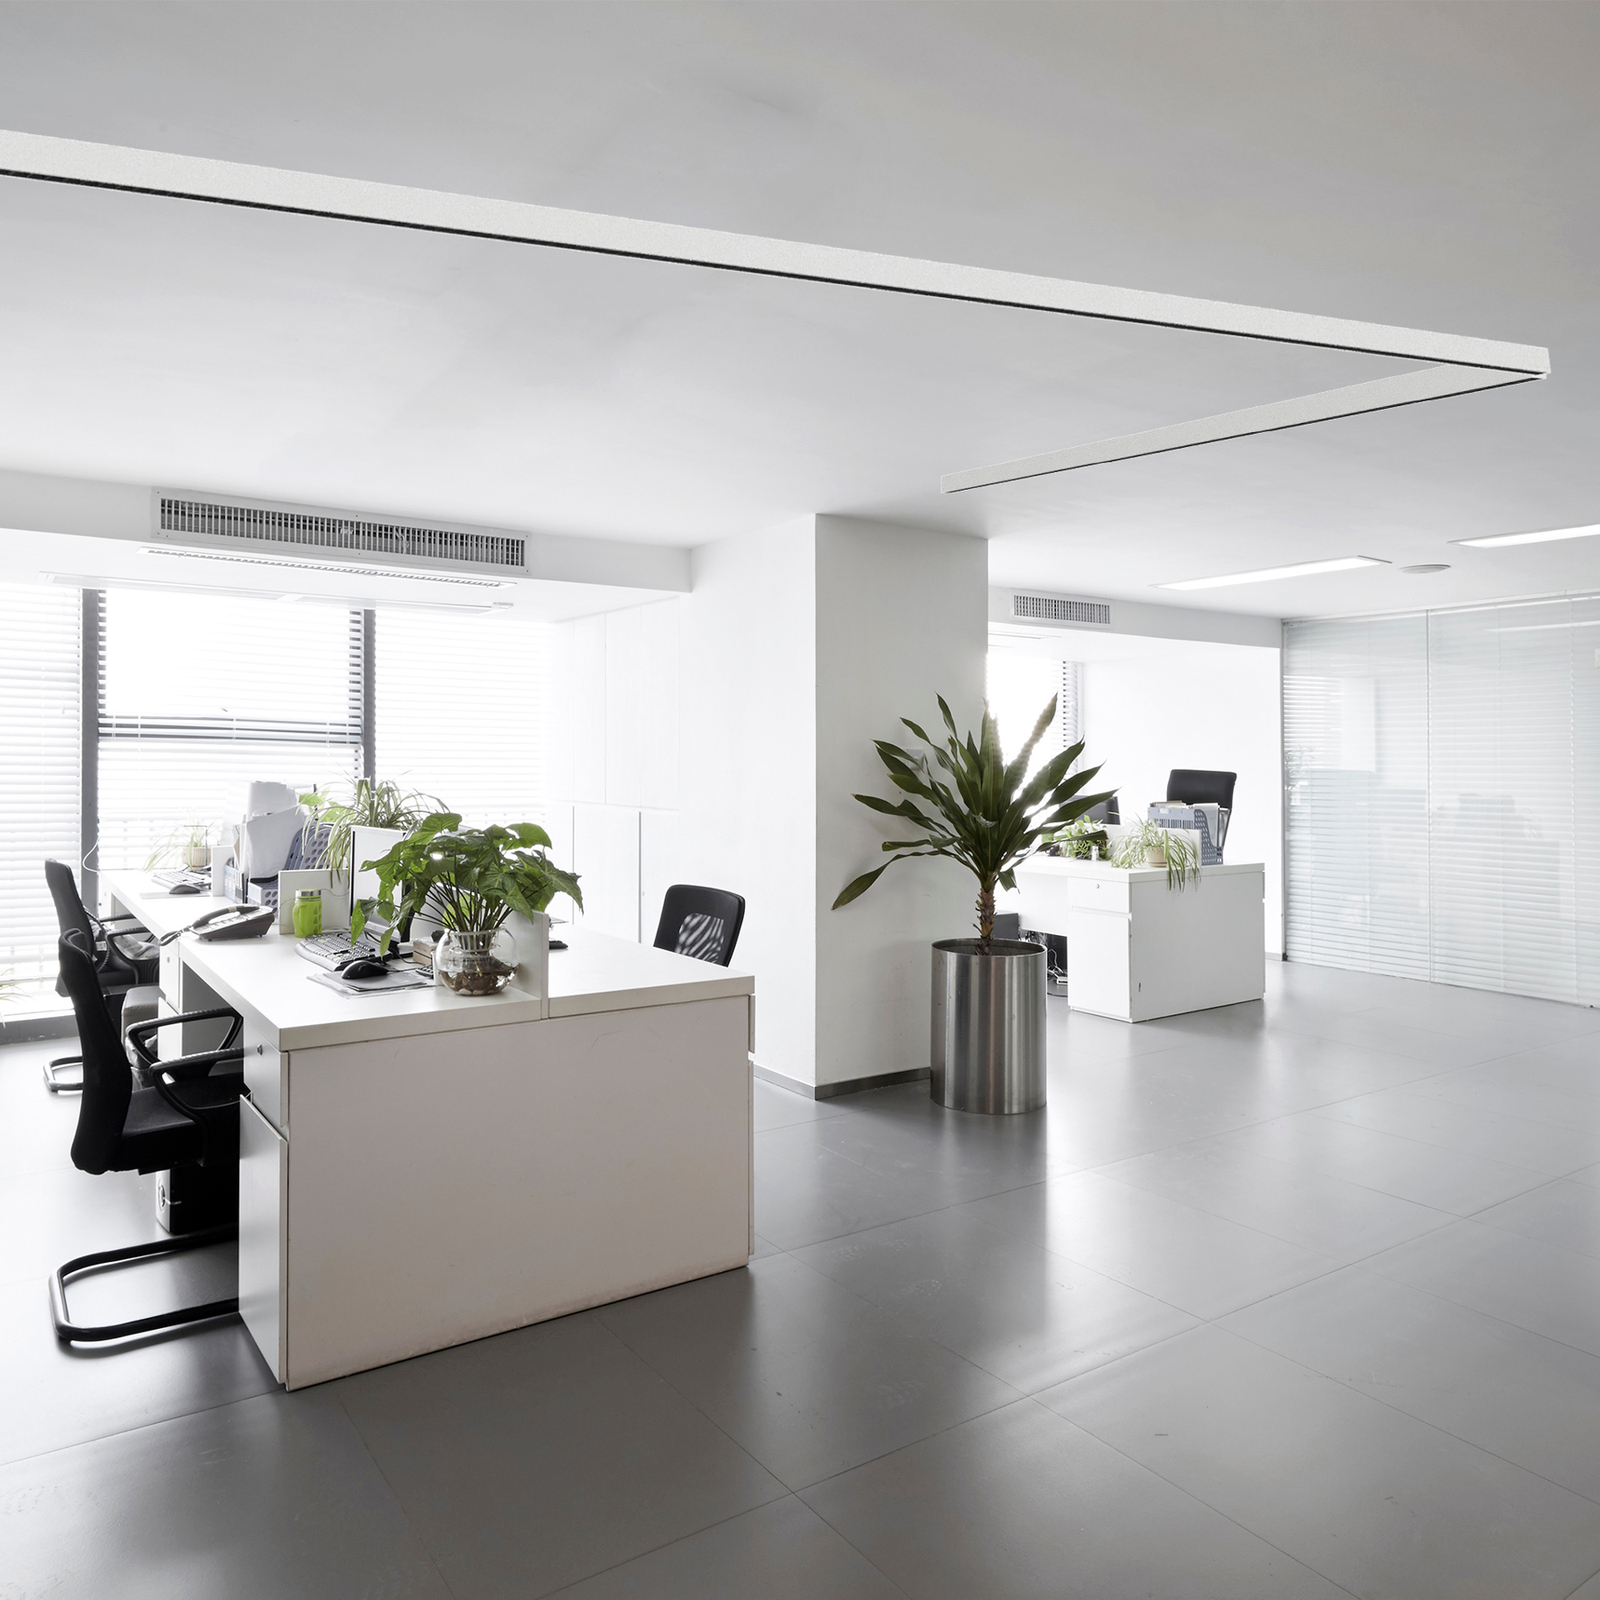 LI-EX Office LED aanbouw lamp Afstandsbediening 190cm wit